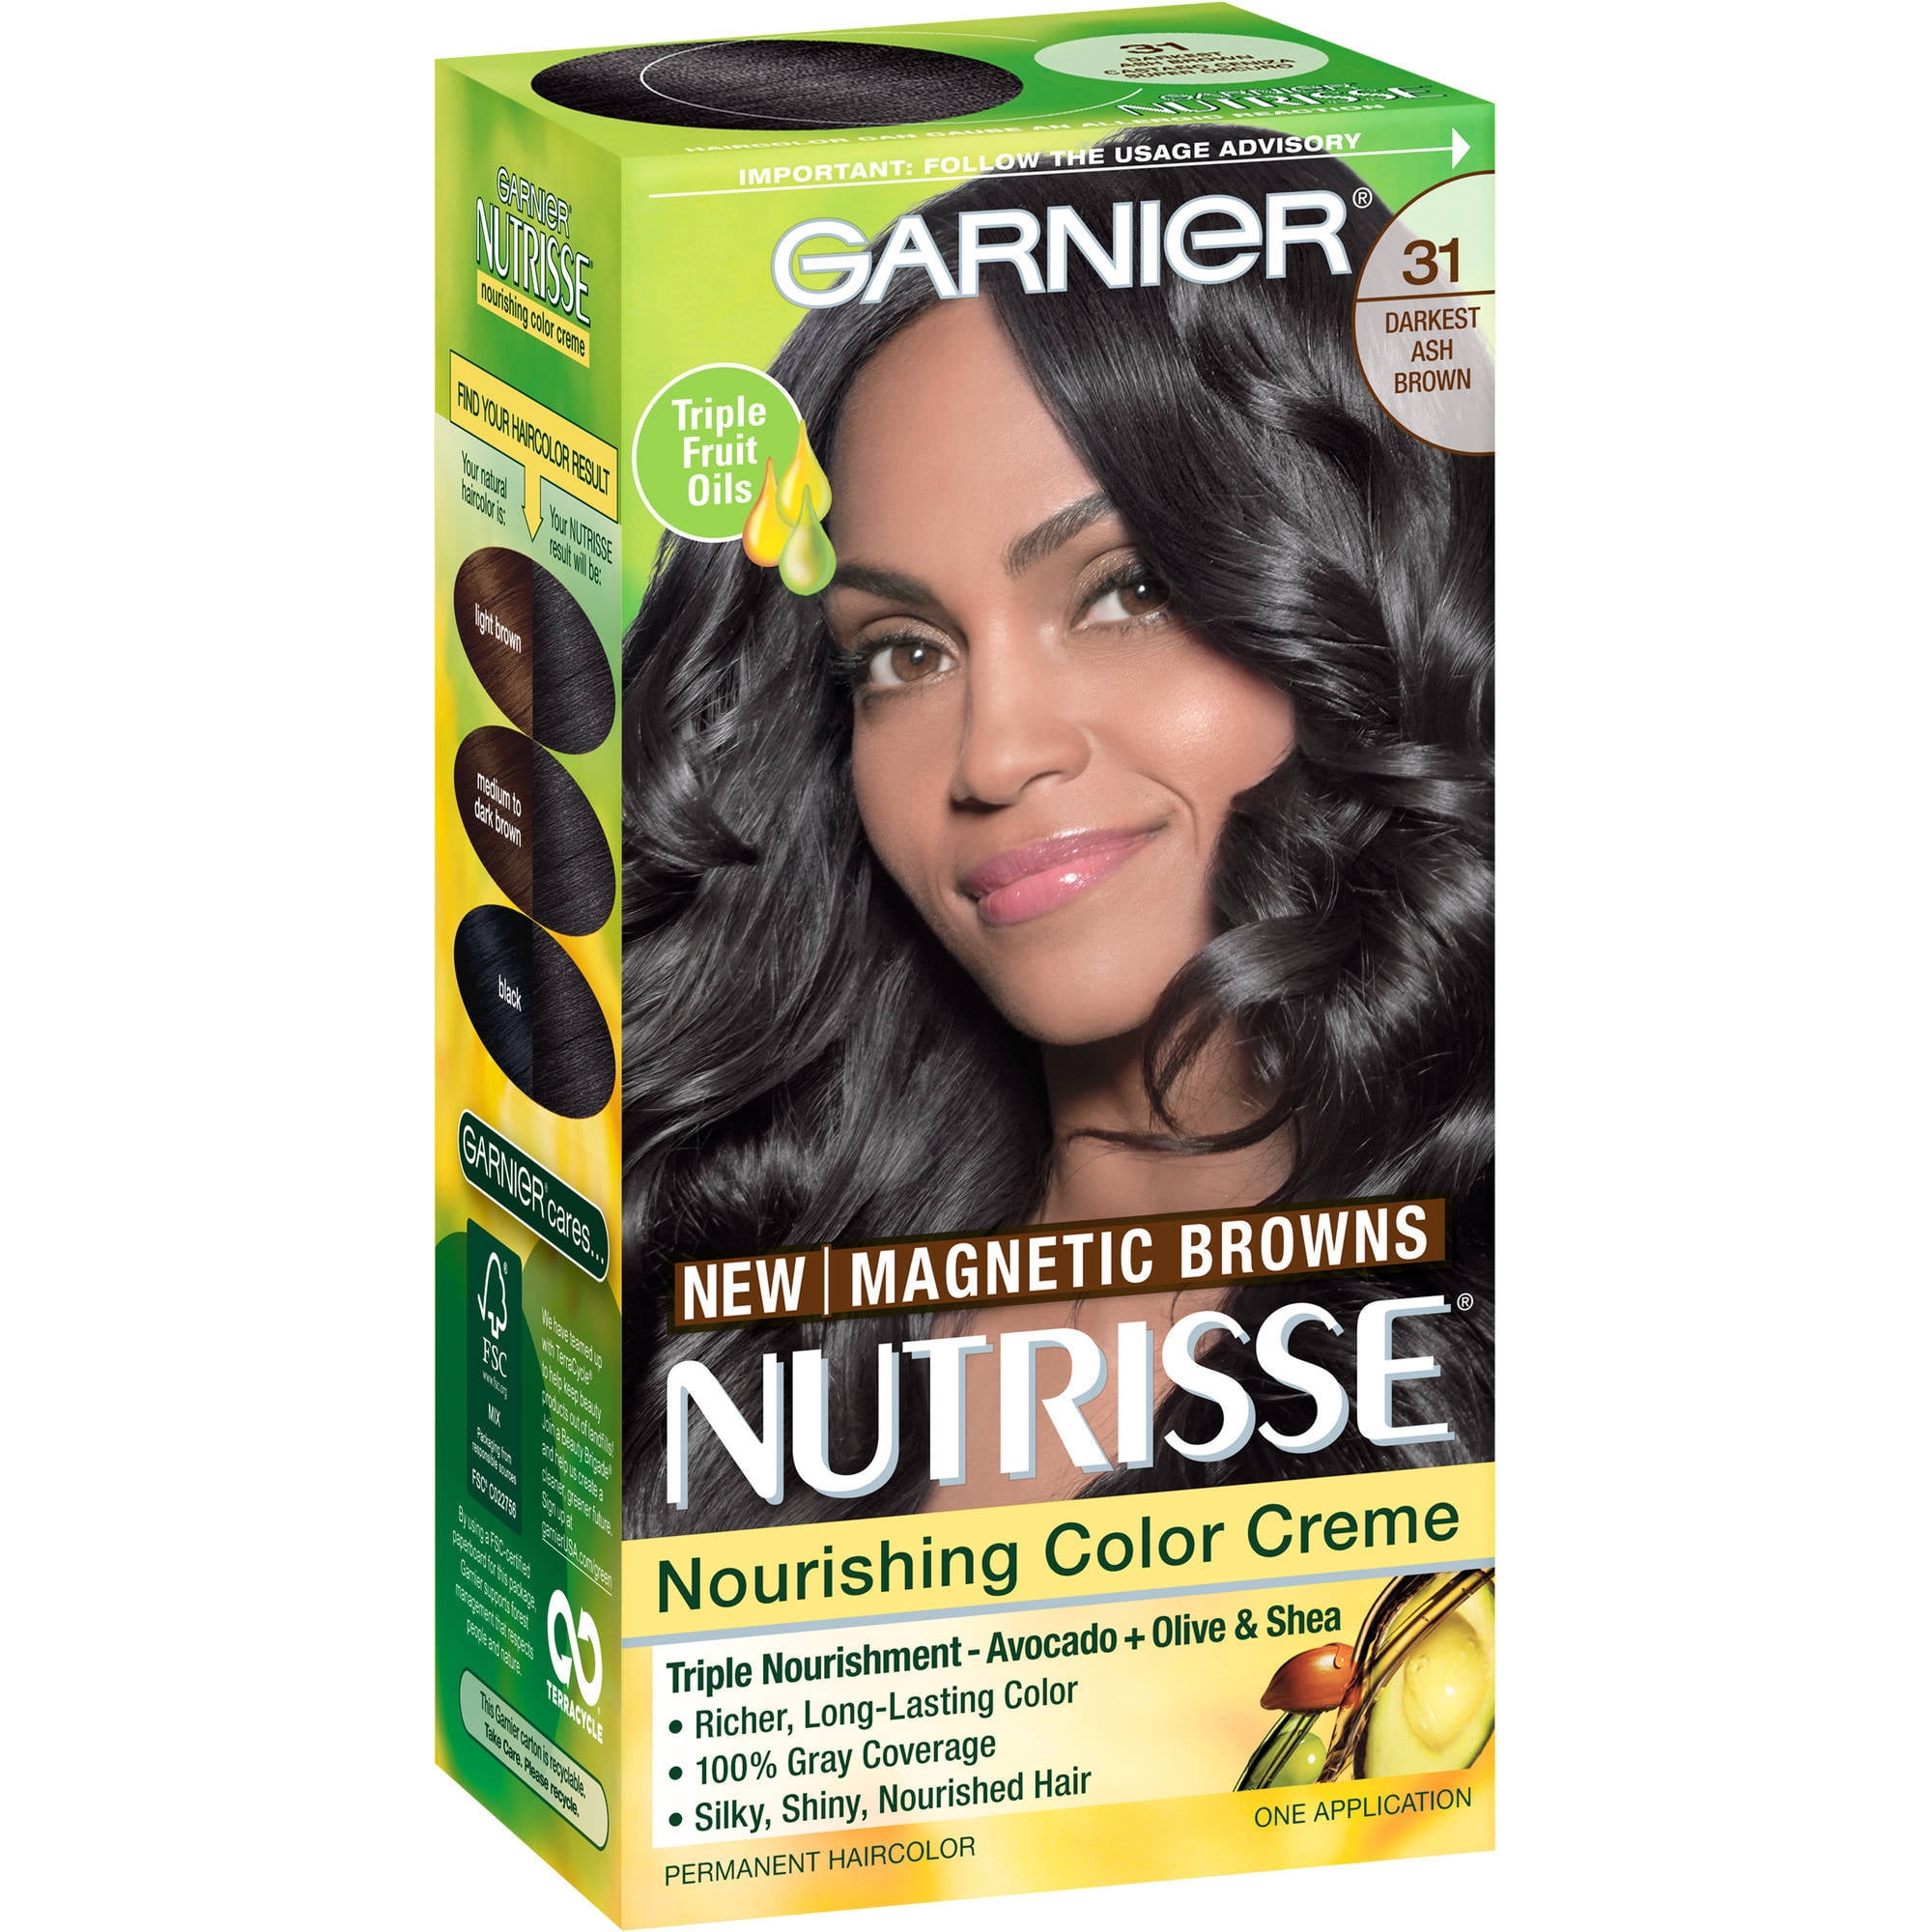 Garnier Nutrisse Nourishing Color Creme, 31 Darkest Ash Brown 